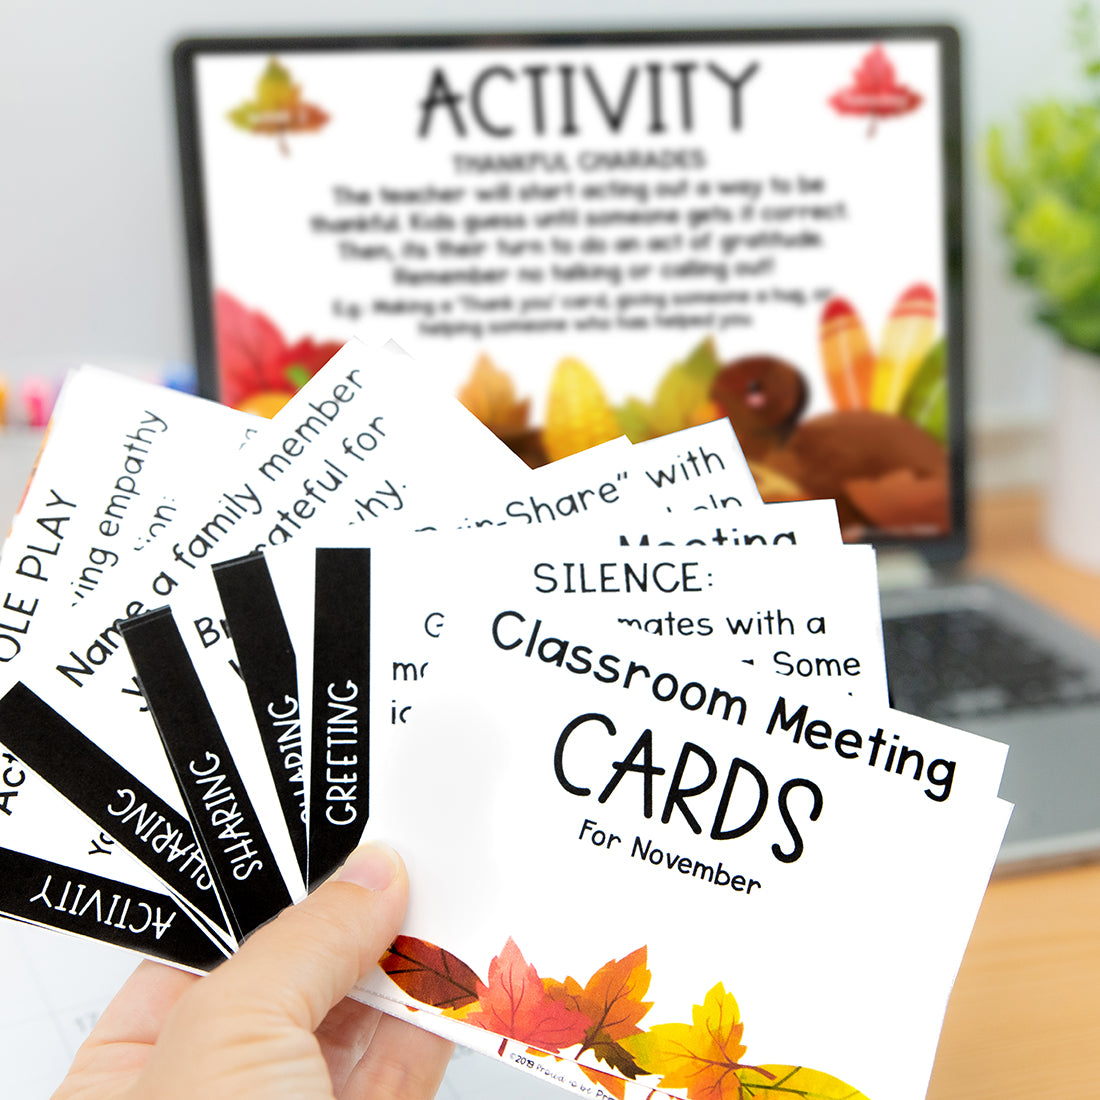 November Morning Meeting Slides - Activities, Question, Greetings - Thanksgiving